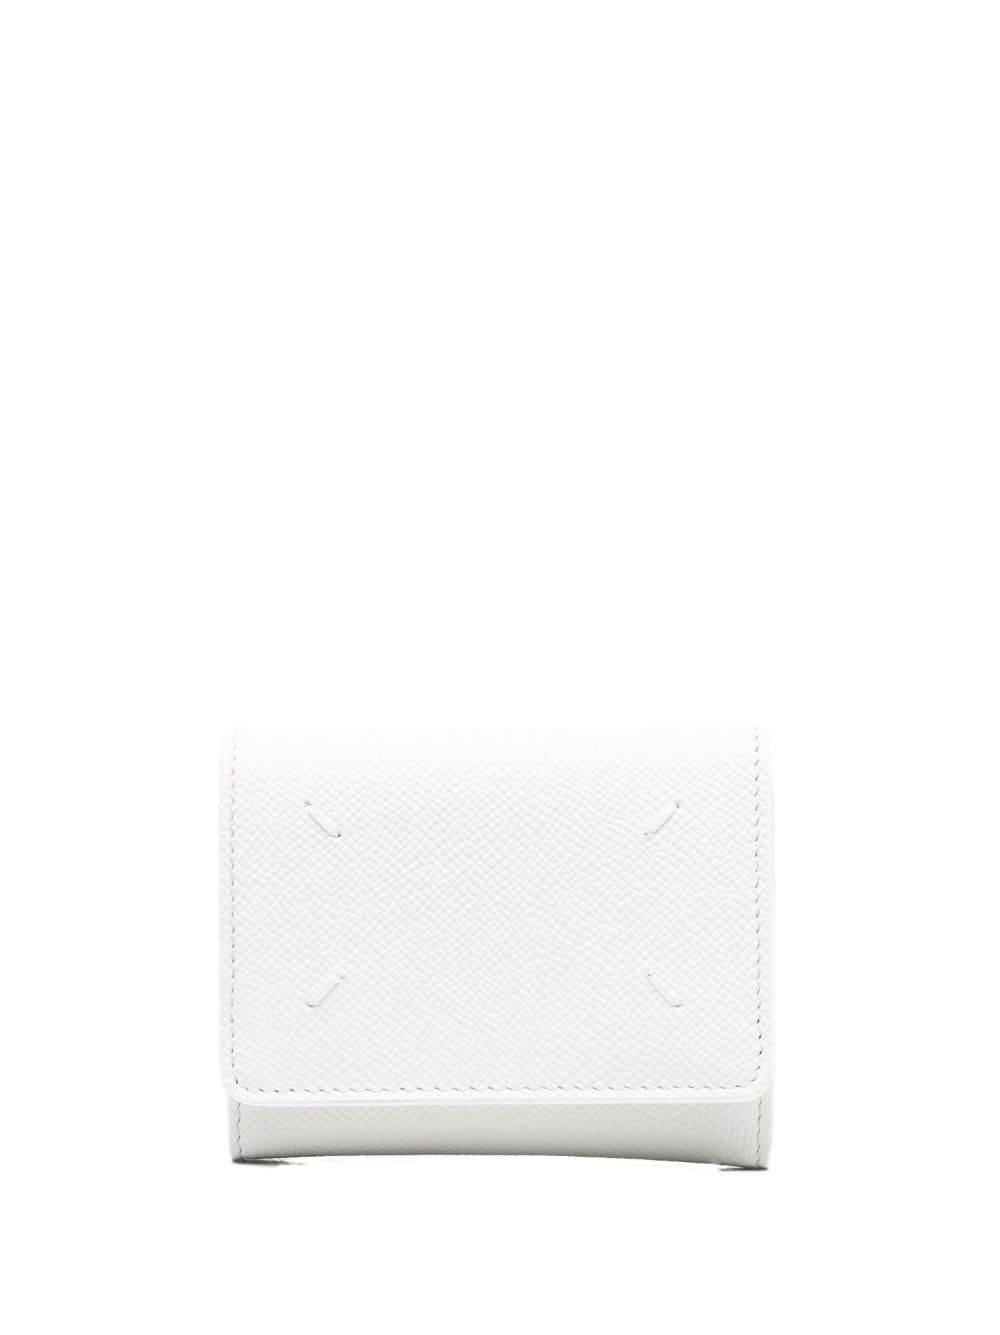 tri-fold leather wallet - 1